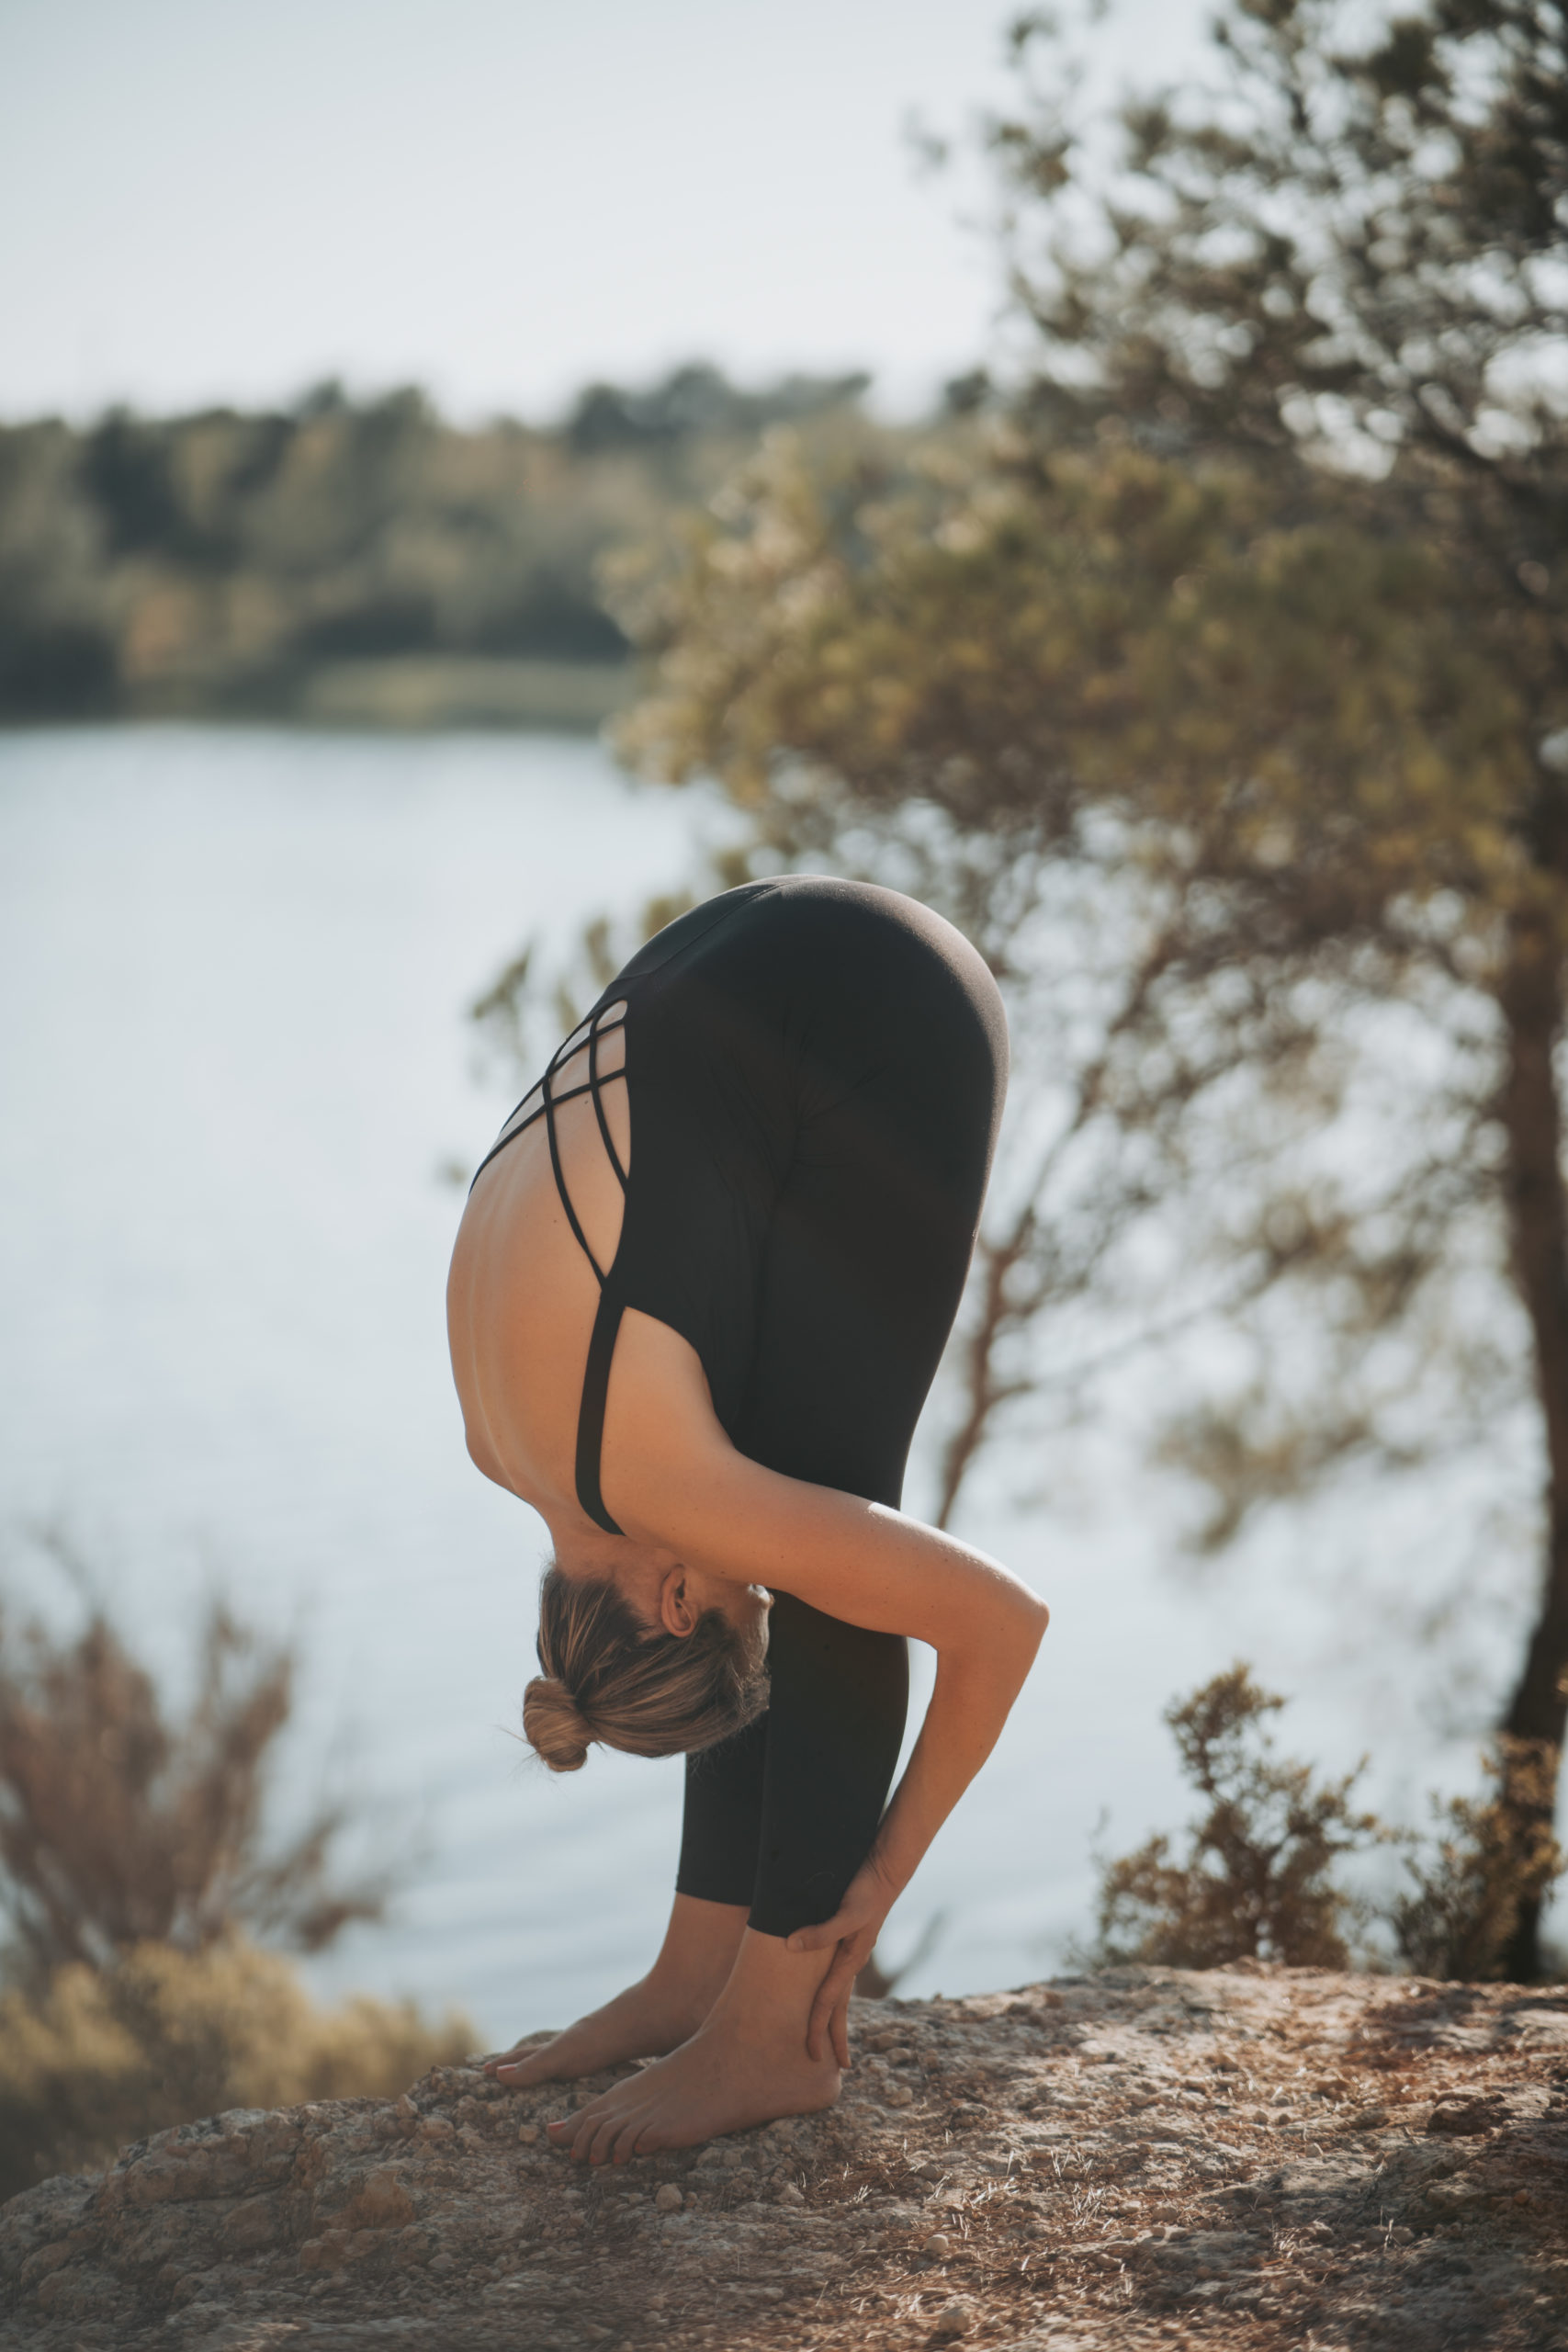 Sarah yoga aime et respire